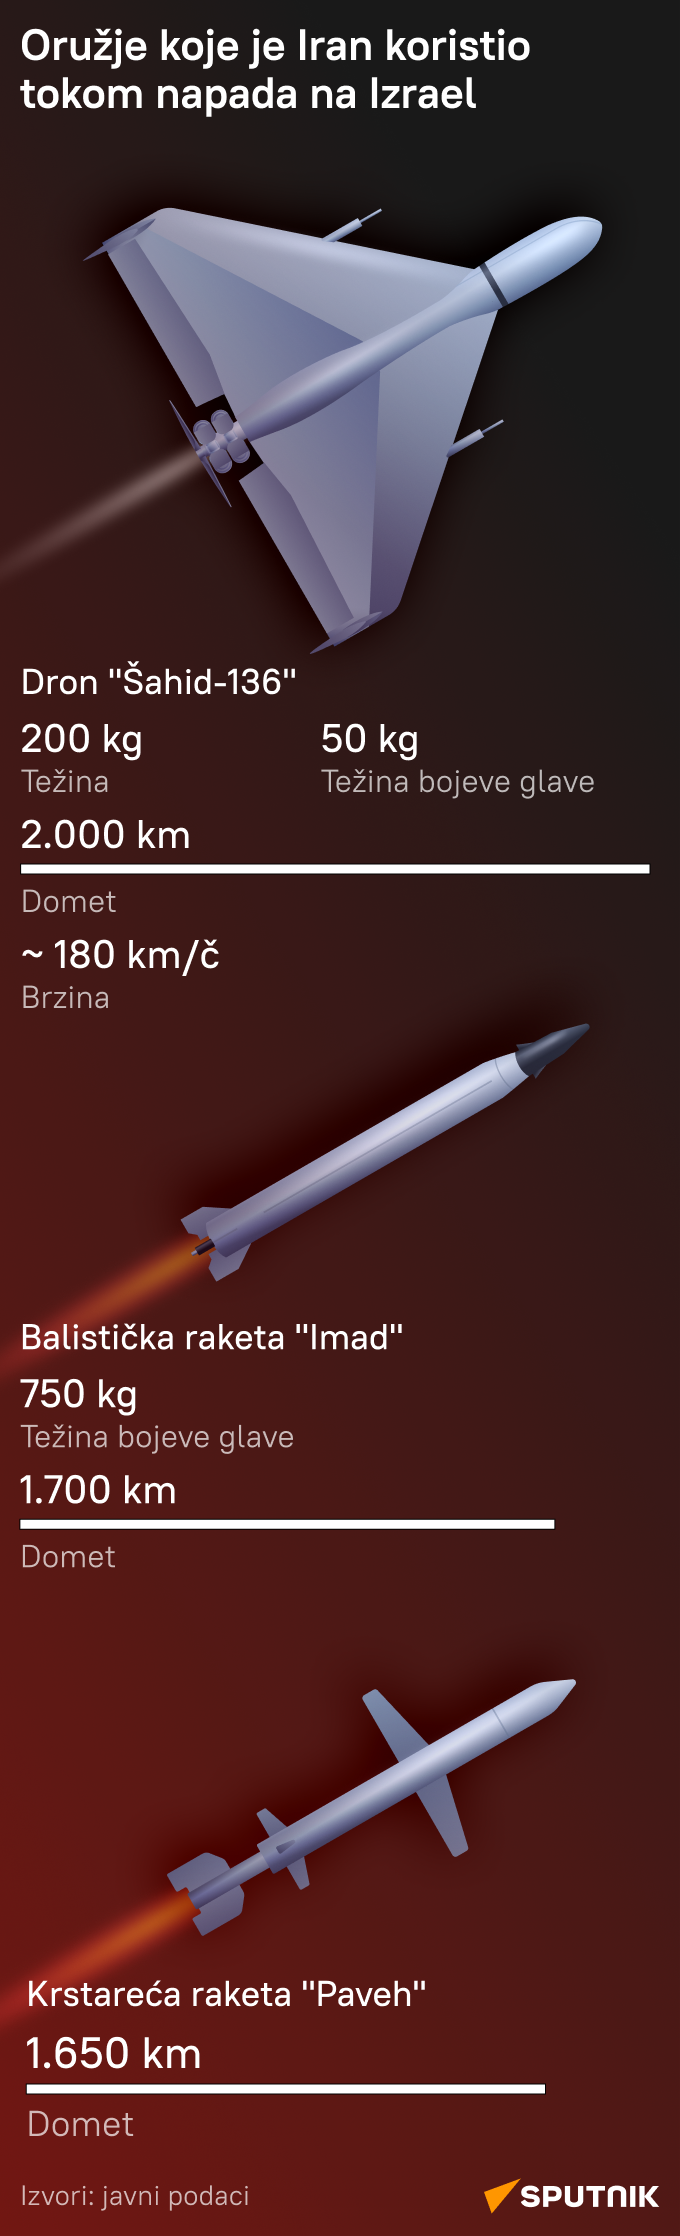 Iransko oružje - Sputnik Srbija